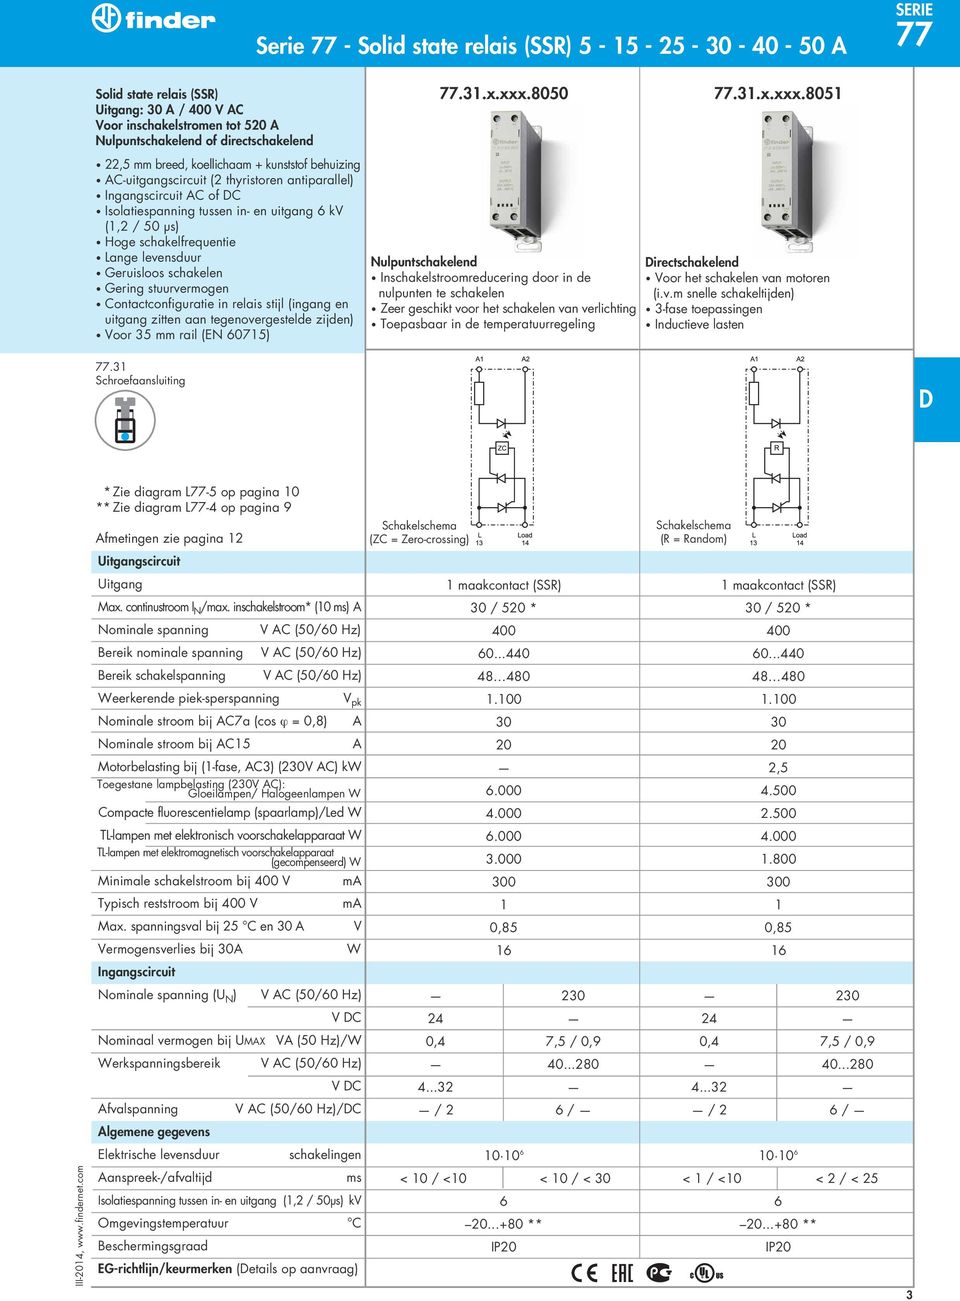 8051 22,5 mm breed, koellichaam + kunststof behuizing AC-uitgangscircuit (2 thyristoren antiparallel) Ingangscircuit AC of C Isolatiespanning tussen in- en uitgang 6 kv (1,2 / 50 μs) Hoge